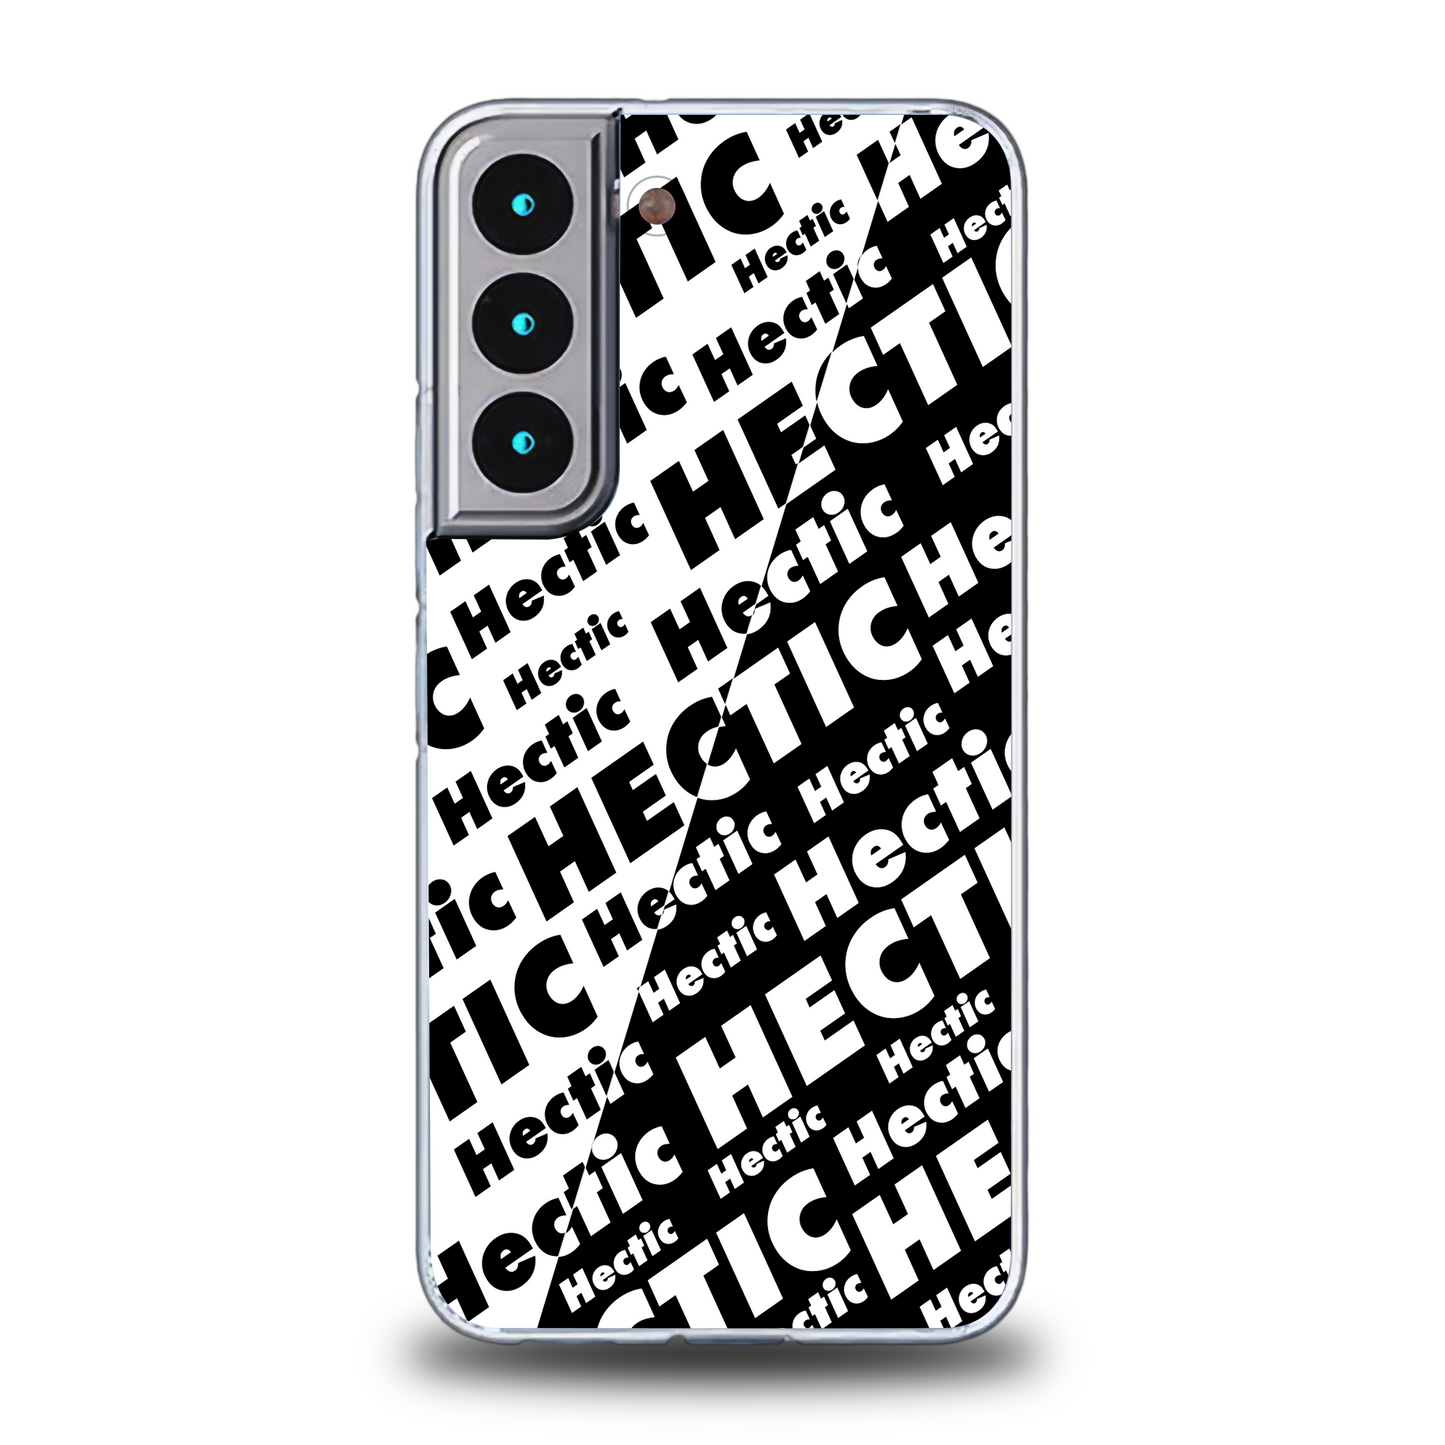 Hectic Phone Case - Samsung